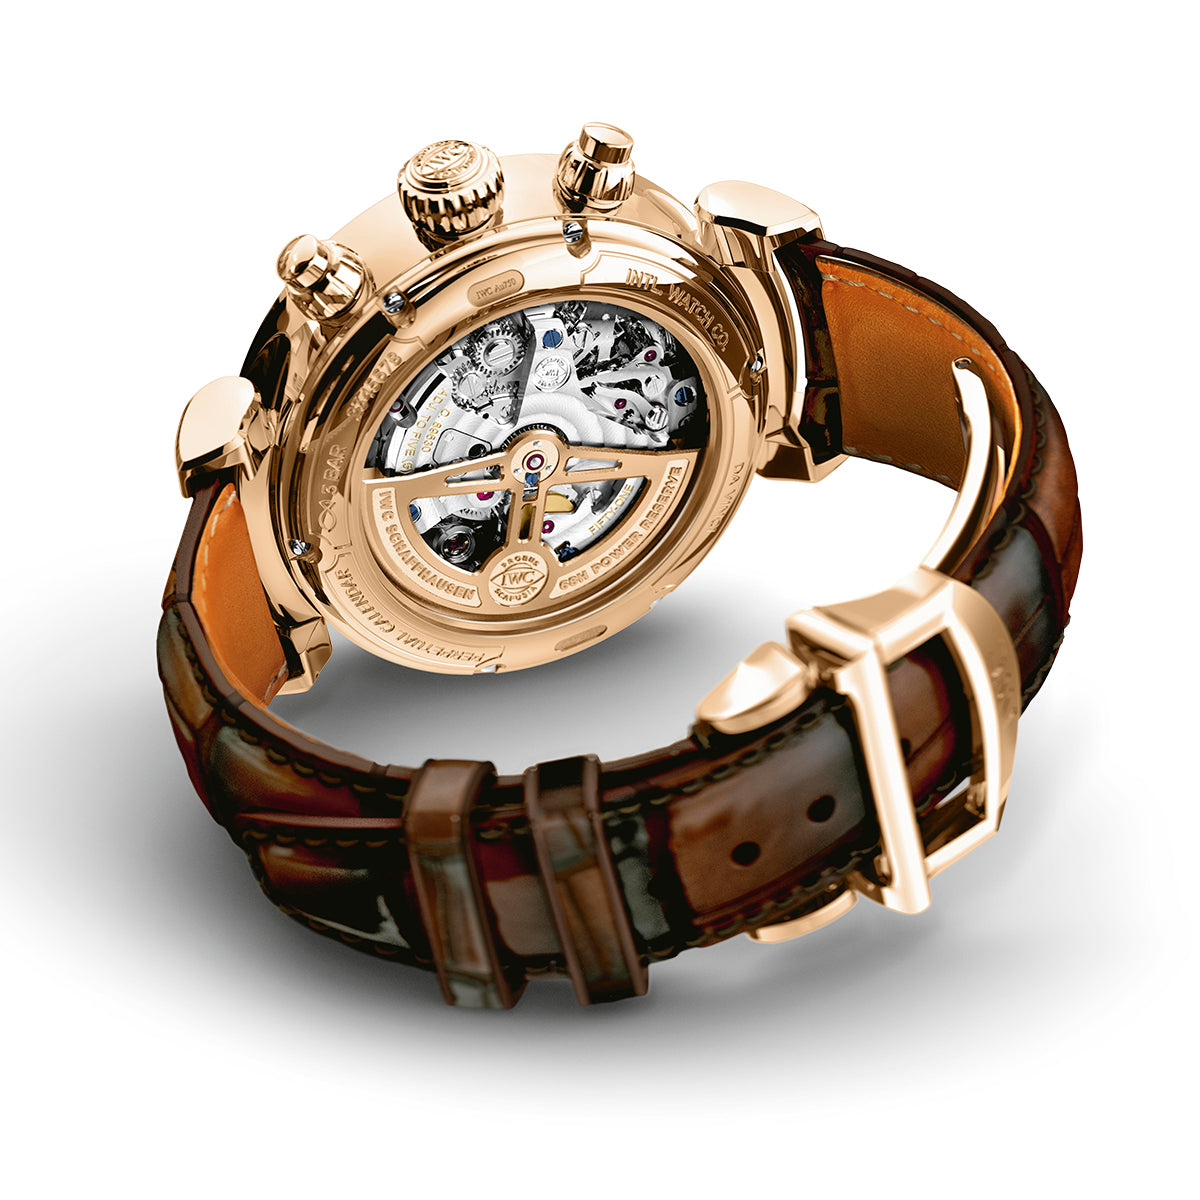 IWC Da Vinci Perpetual Calender Chronograph Mens Watch - IW392101